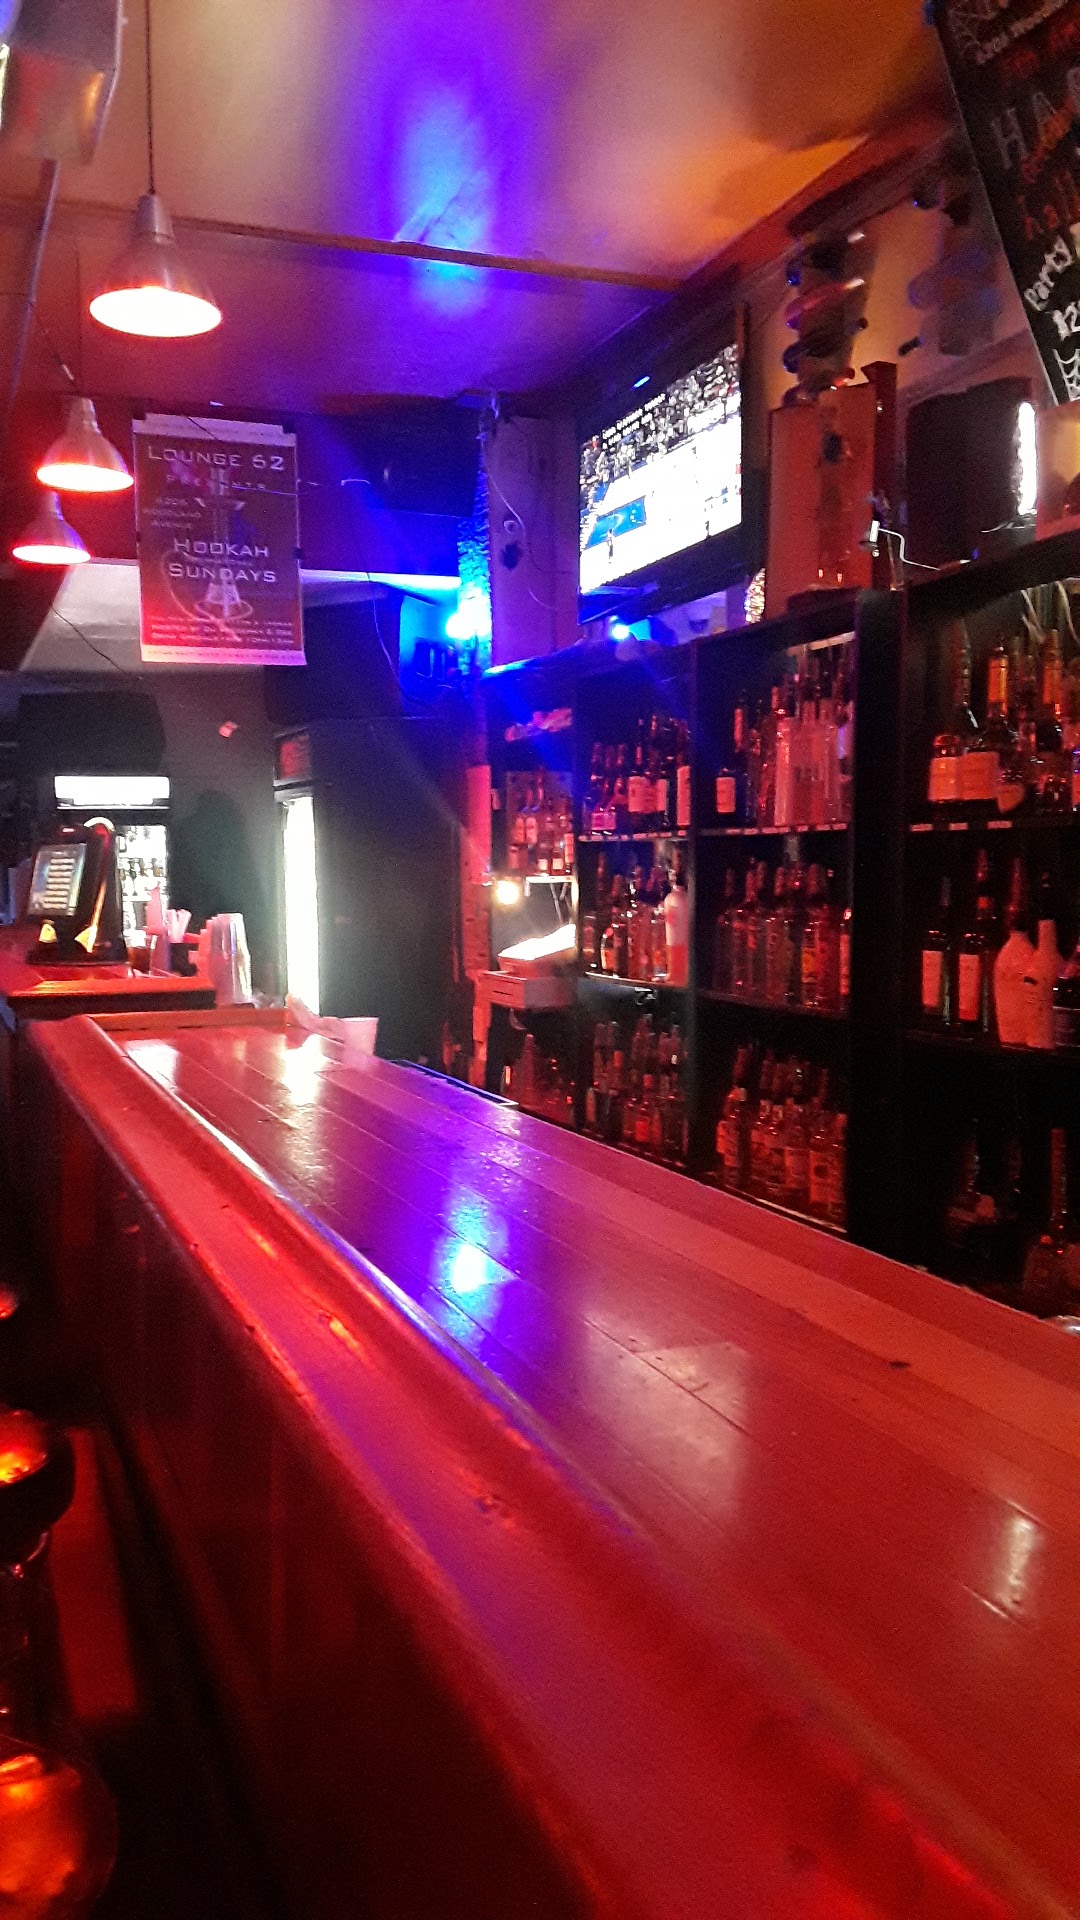 Lounge 62 Sports Bar & Grill